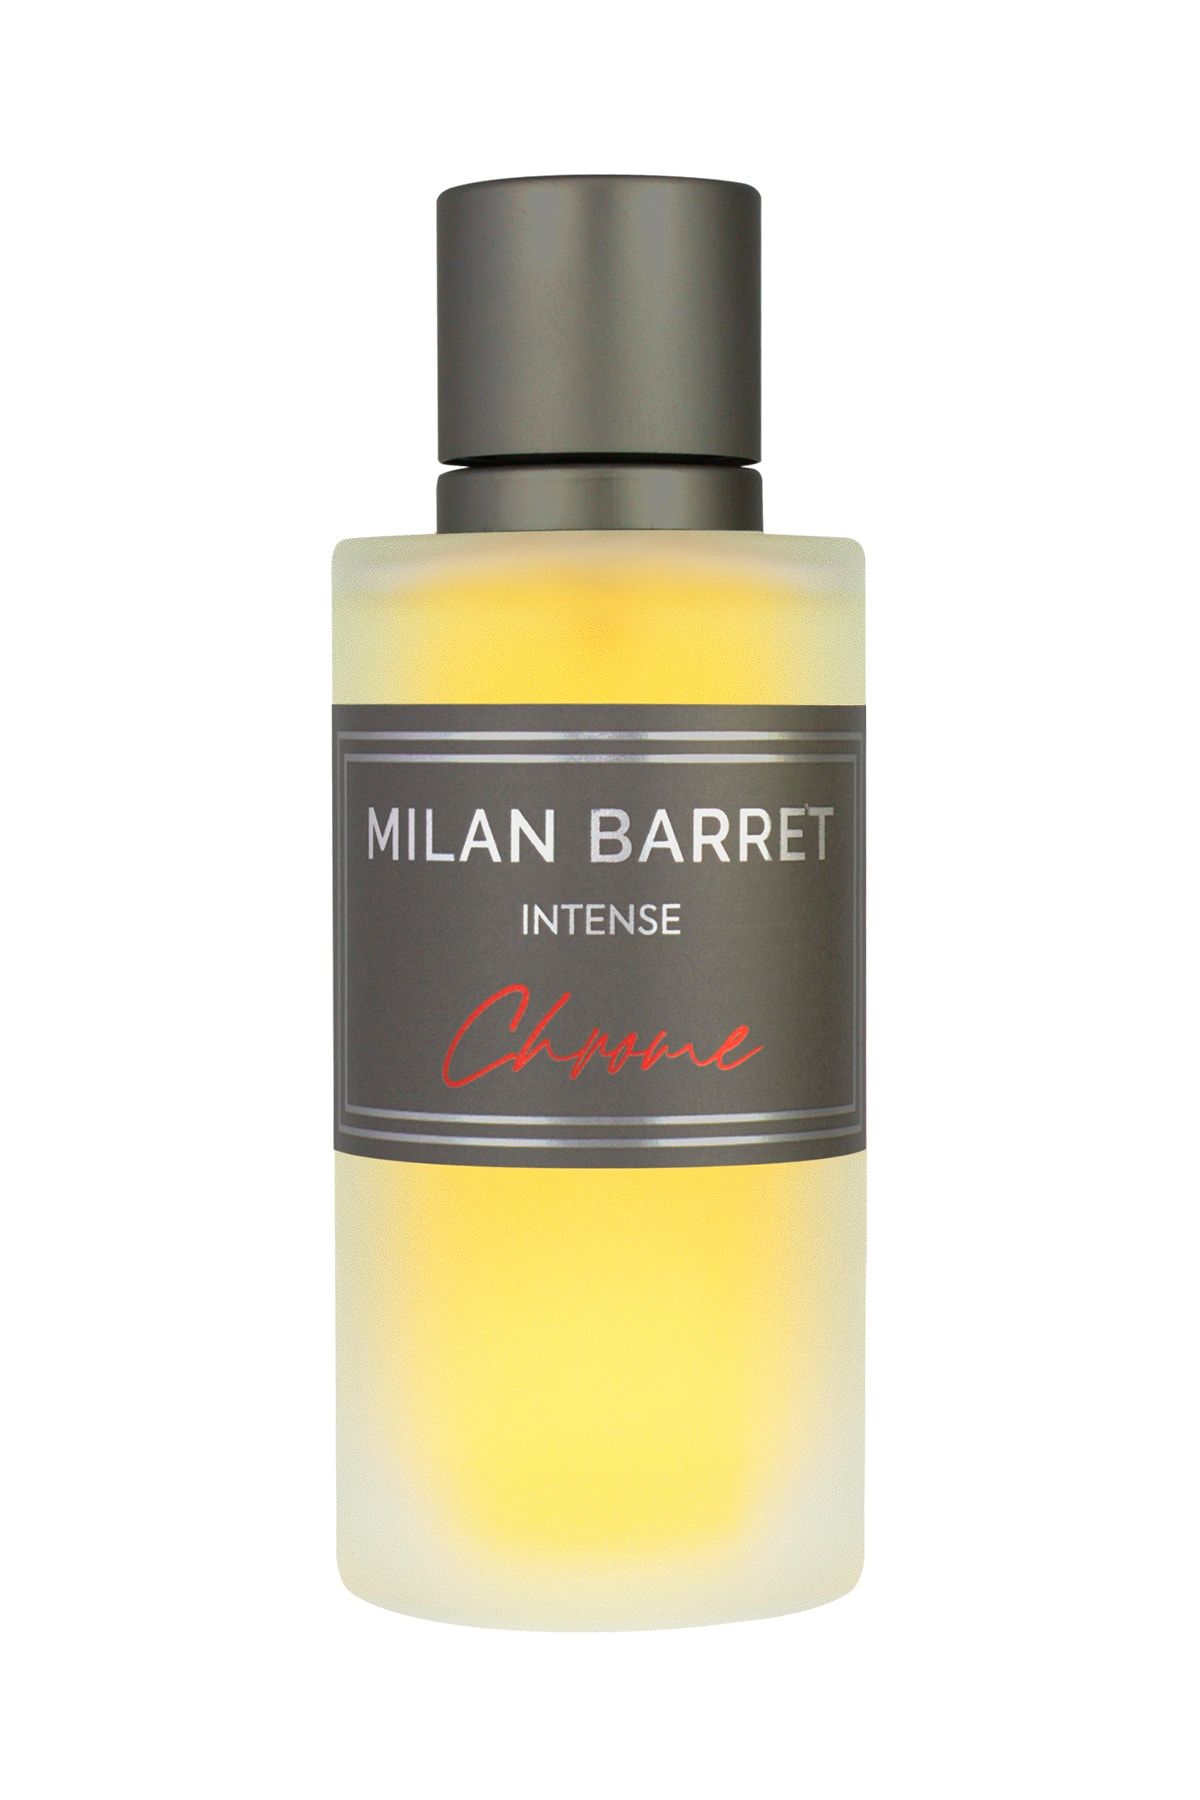 Milan Barret Intense Chrome Erkek Parfüm Edp 100 ml